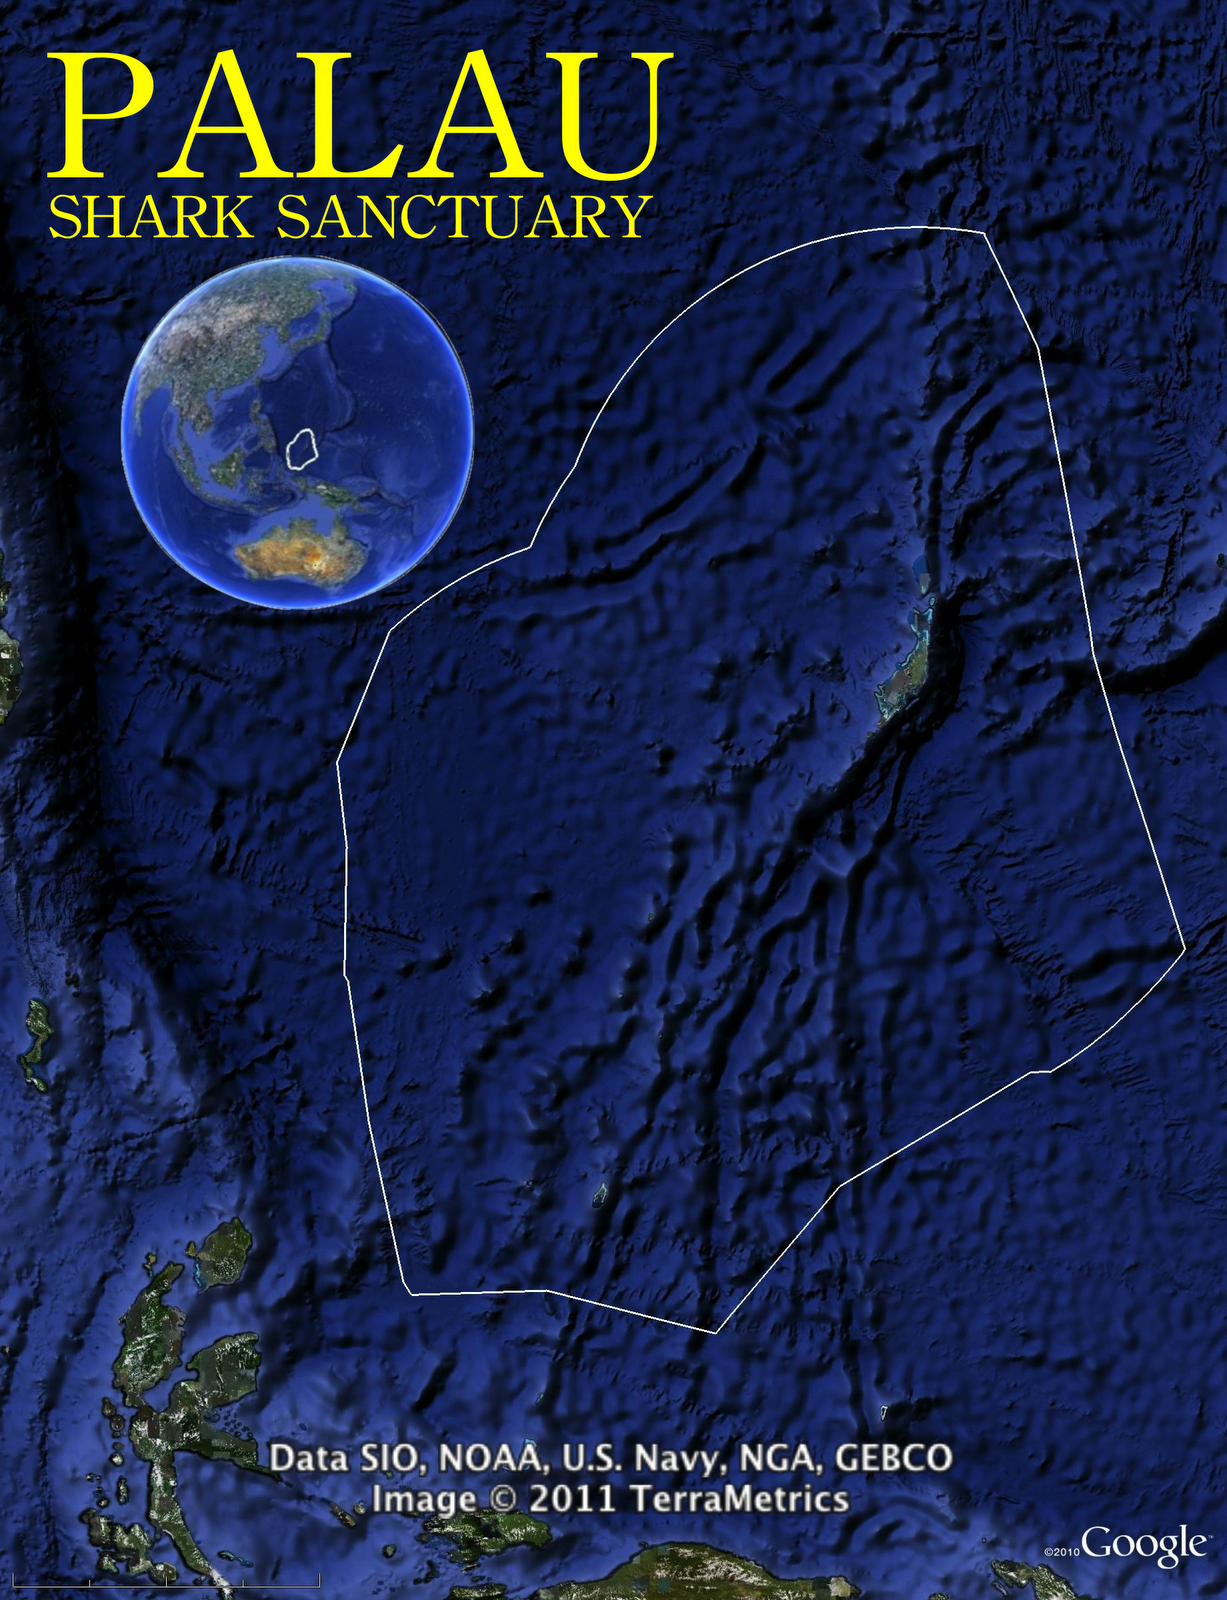 responsible tourism's impacts shown in Palau shark sanctuary